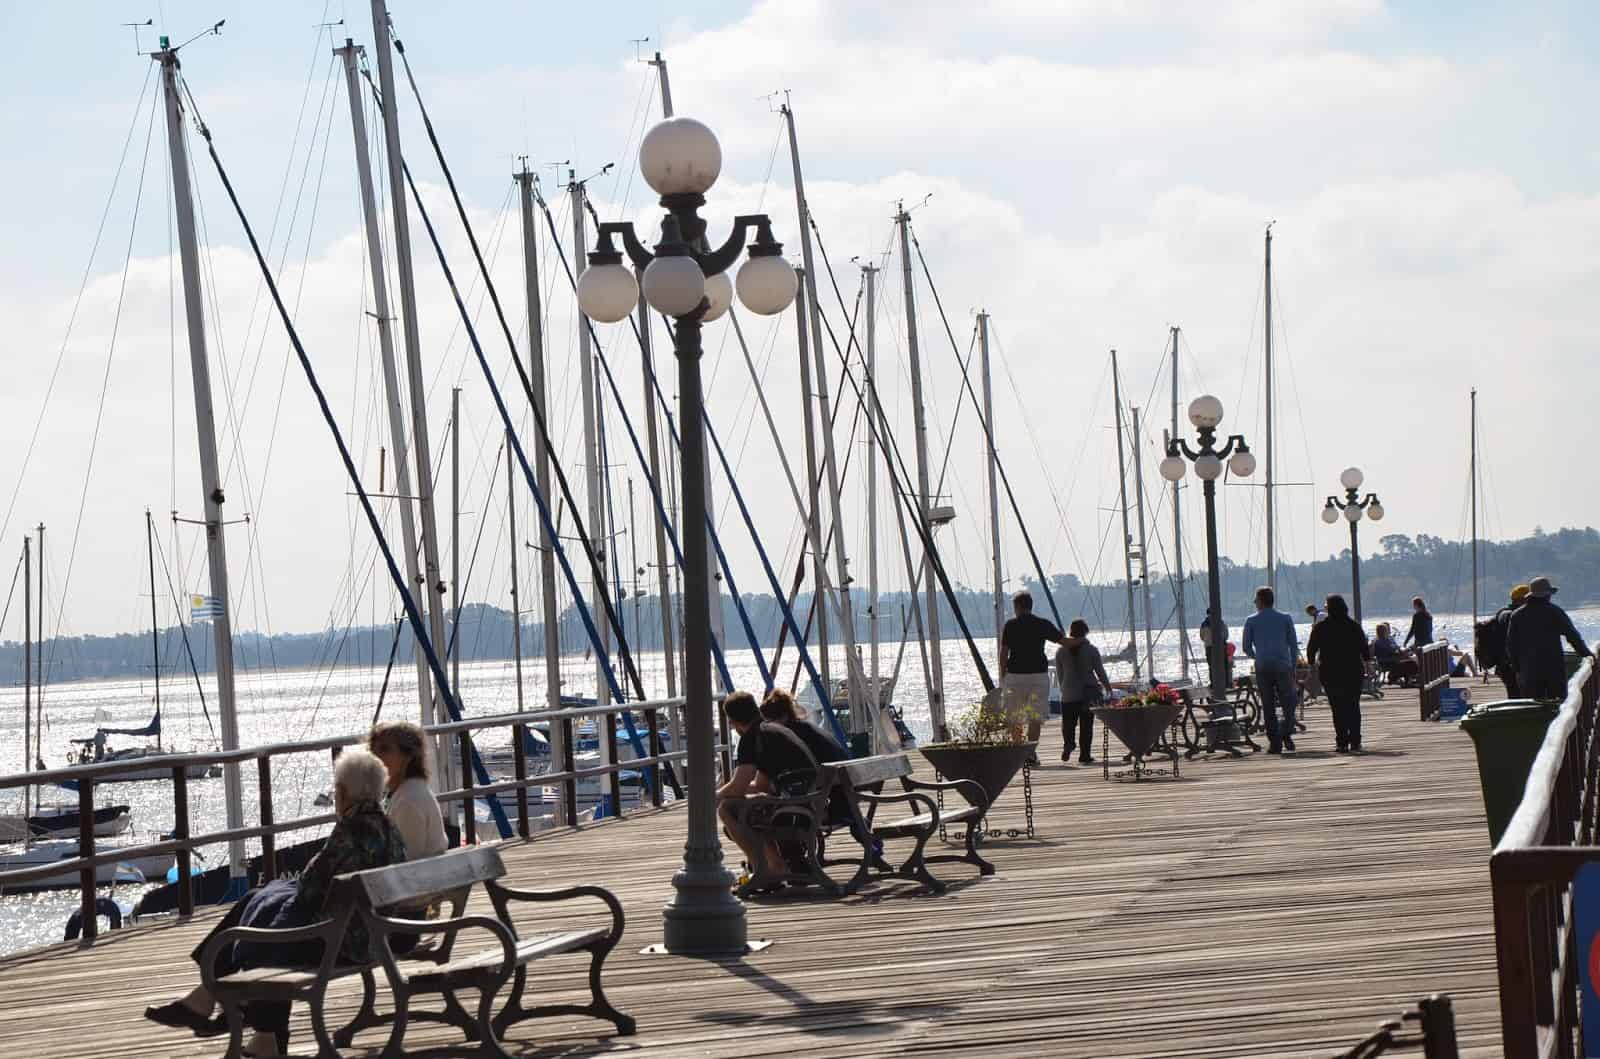 Old pier in Colonia del Sacramento, Uruguay